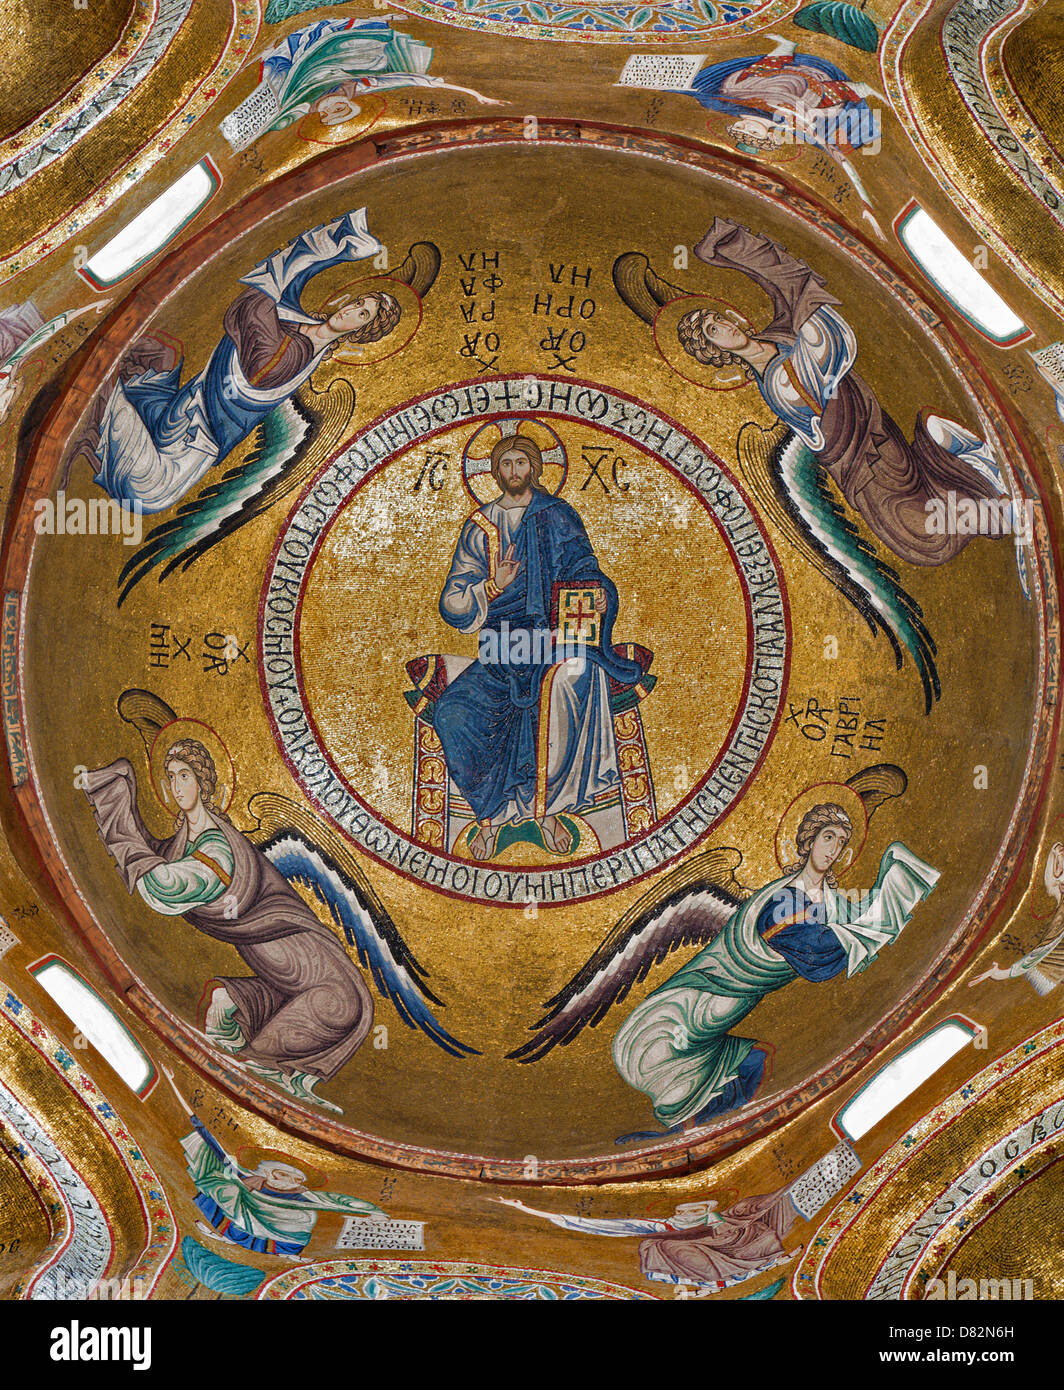 PALERMO - APRIL 8: Mosaic of Jesus Christ from cupola of church Santa Maria dell' Ammiraglio Stock Photo